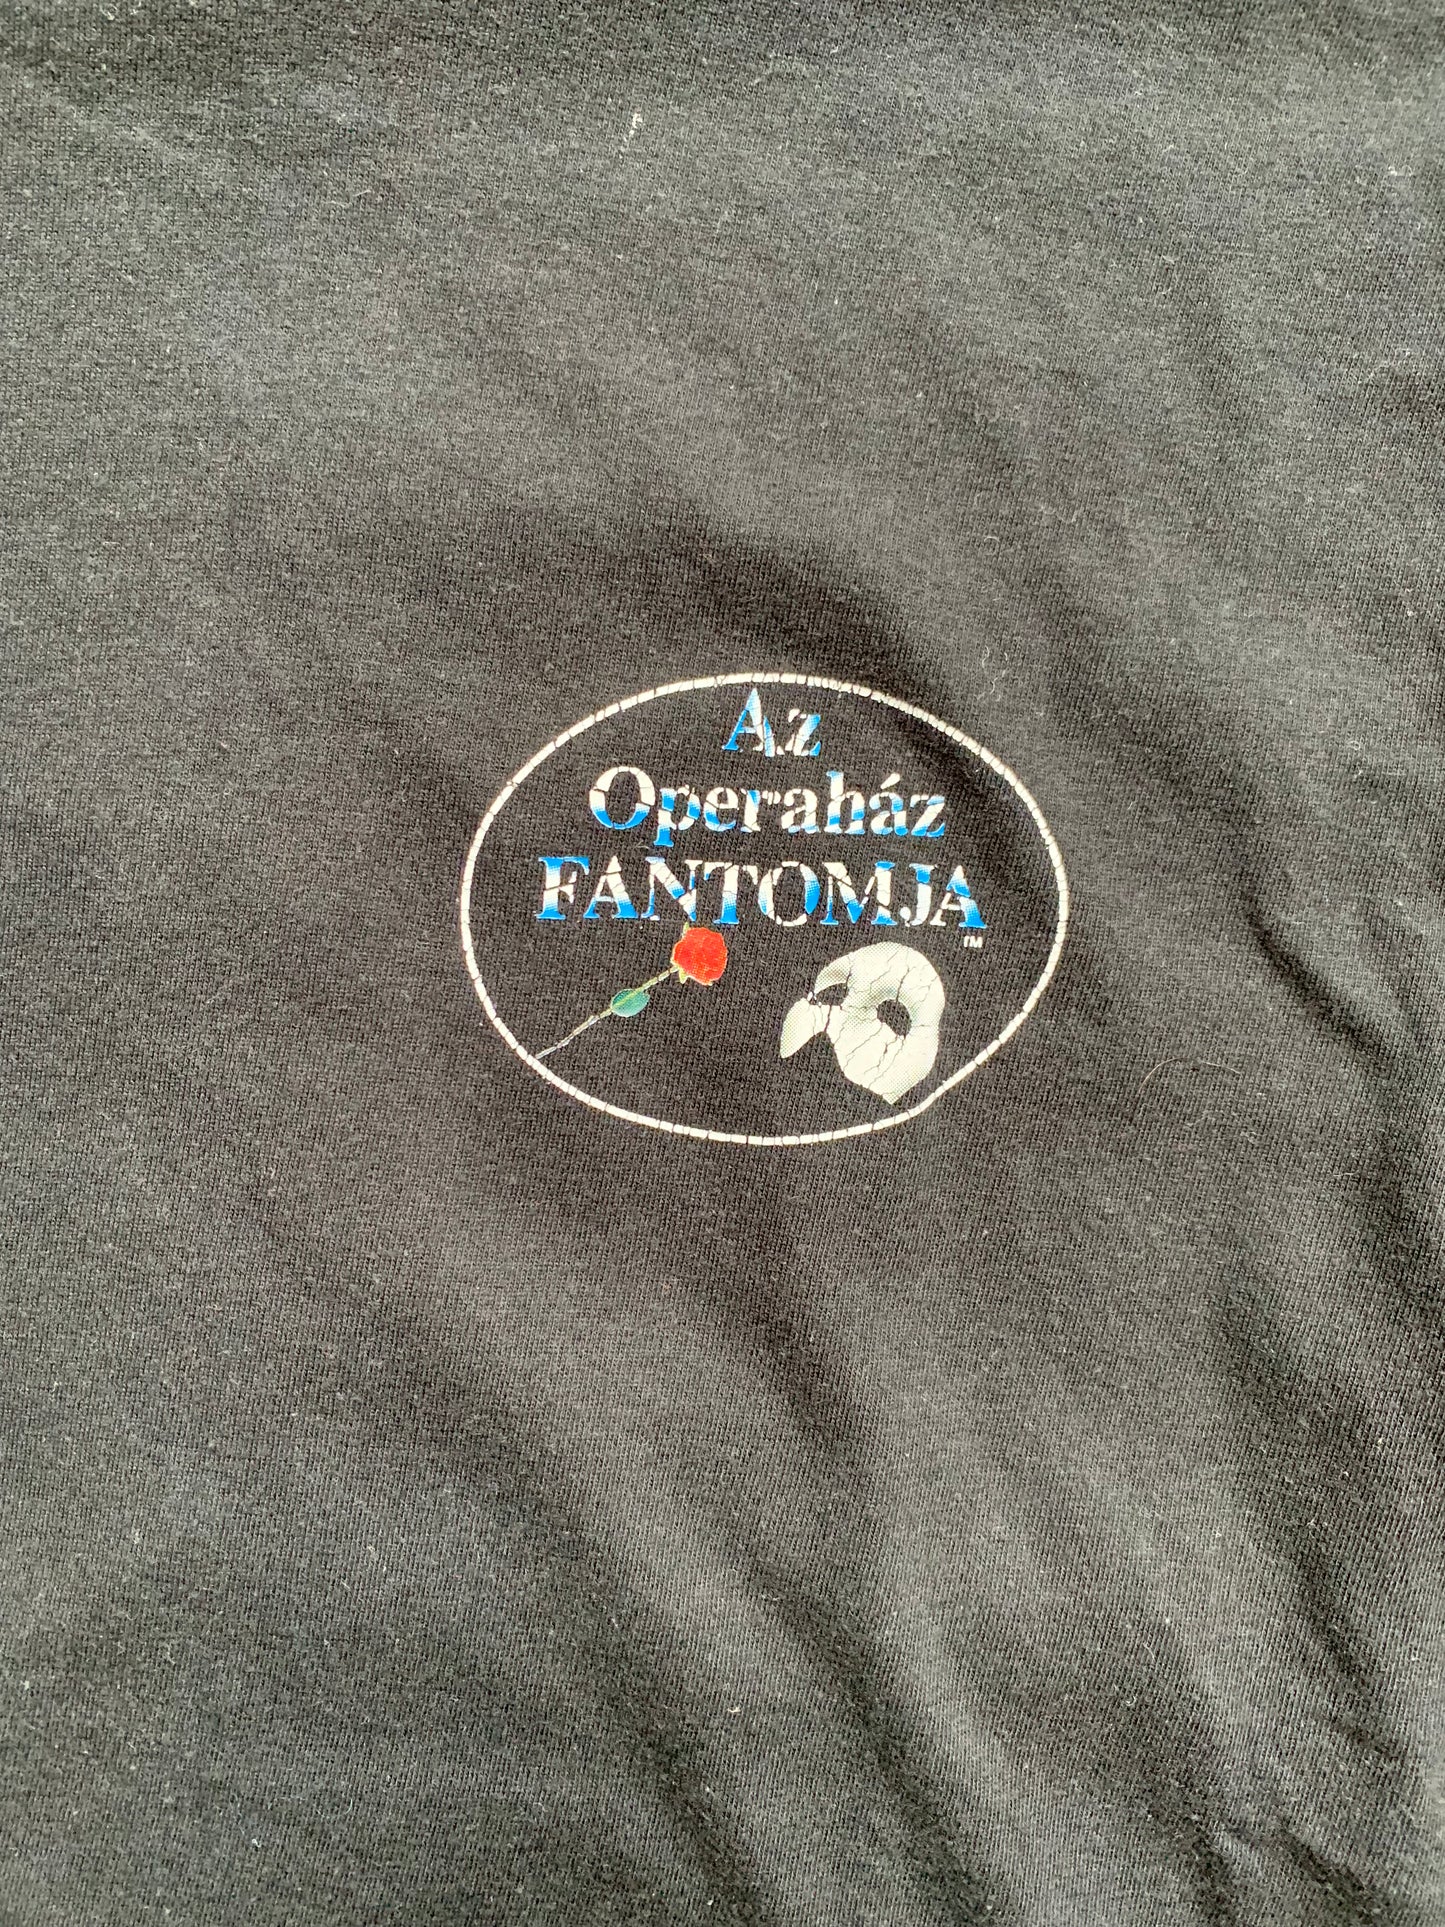 Vintage Hungarian Phantom of the Opera T-Shirt